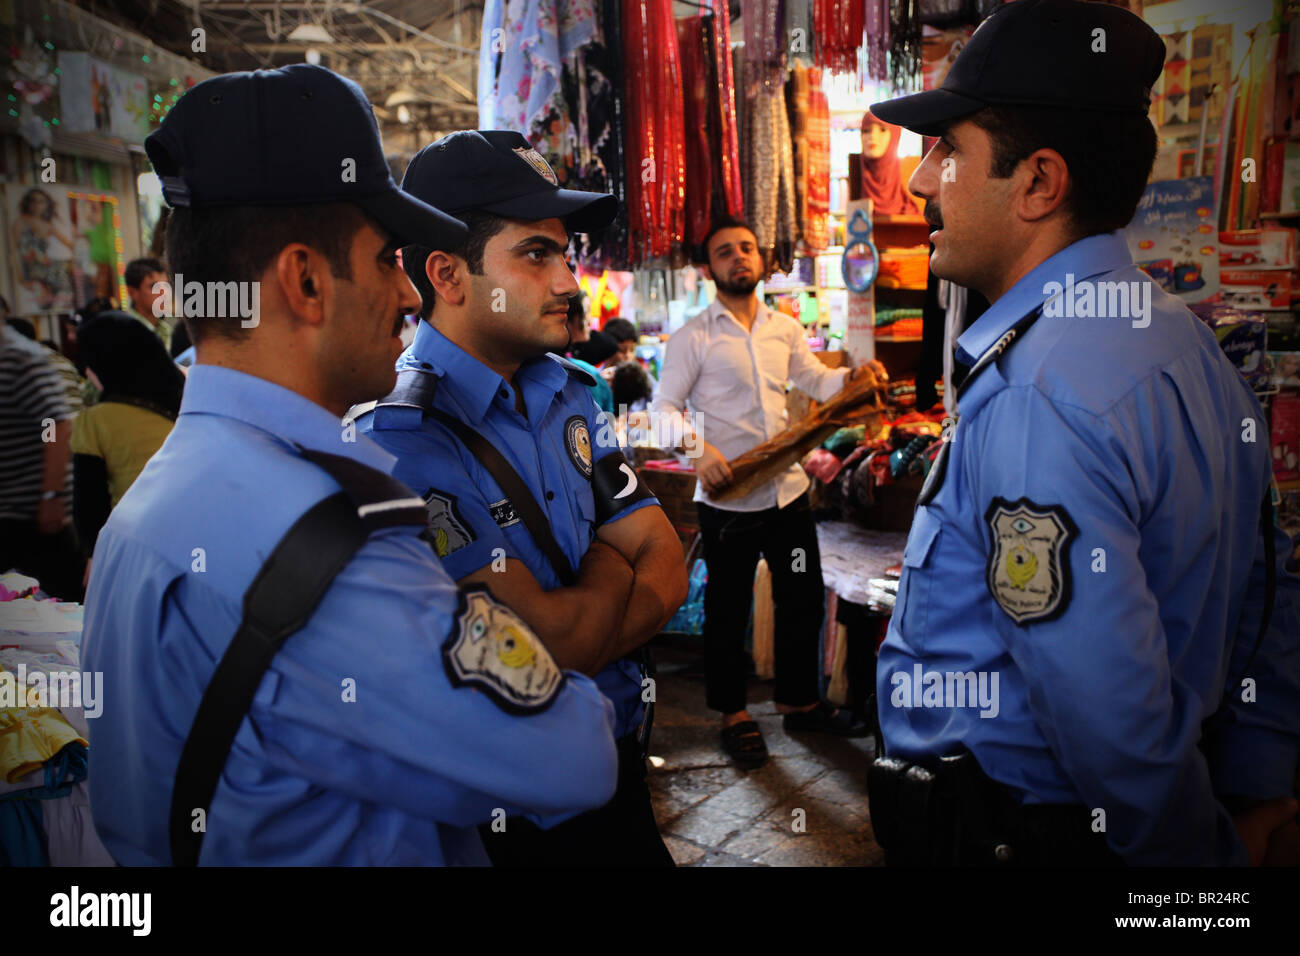 Kurdish policemen chatting in Qaysari bazaar in the city of Erbil also spelled Arbil or Irbil the capital city of Kurdistan Region in northern Iraq. Stock Photo